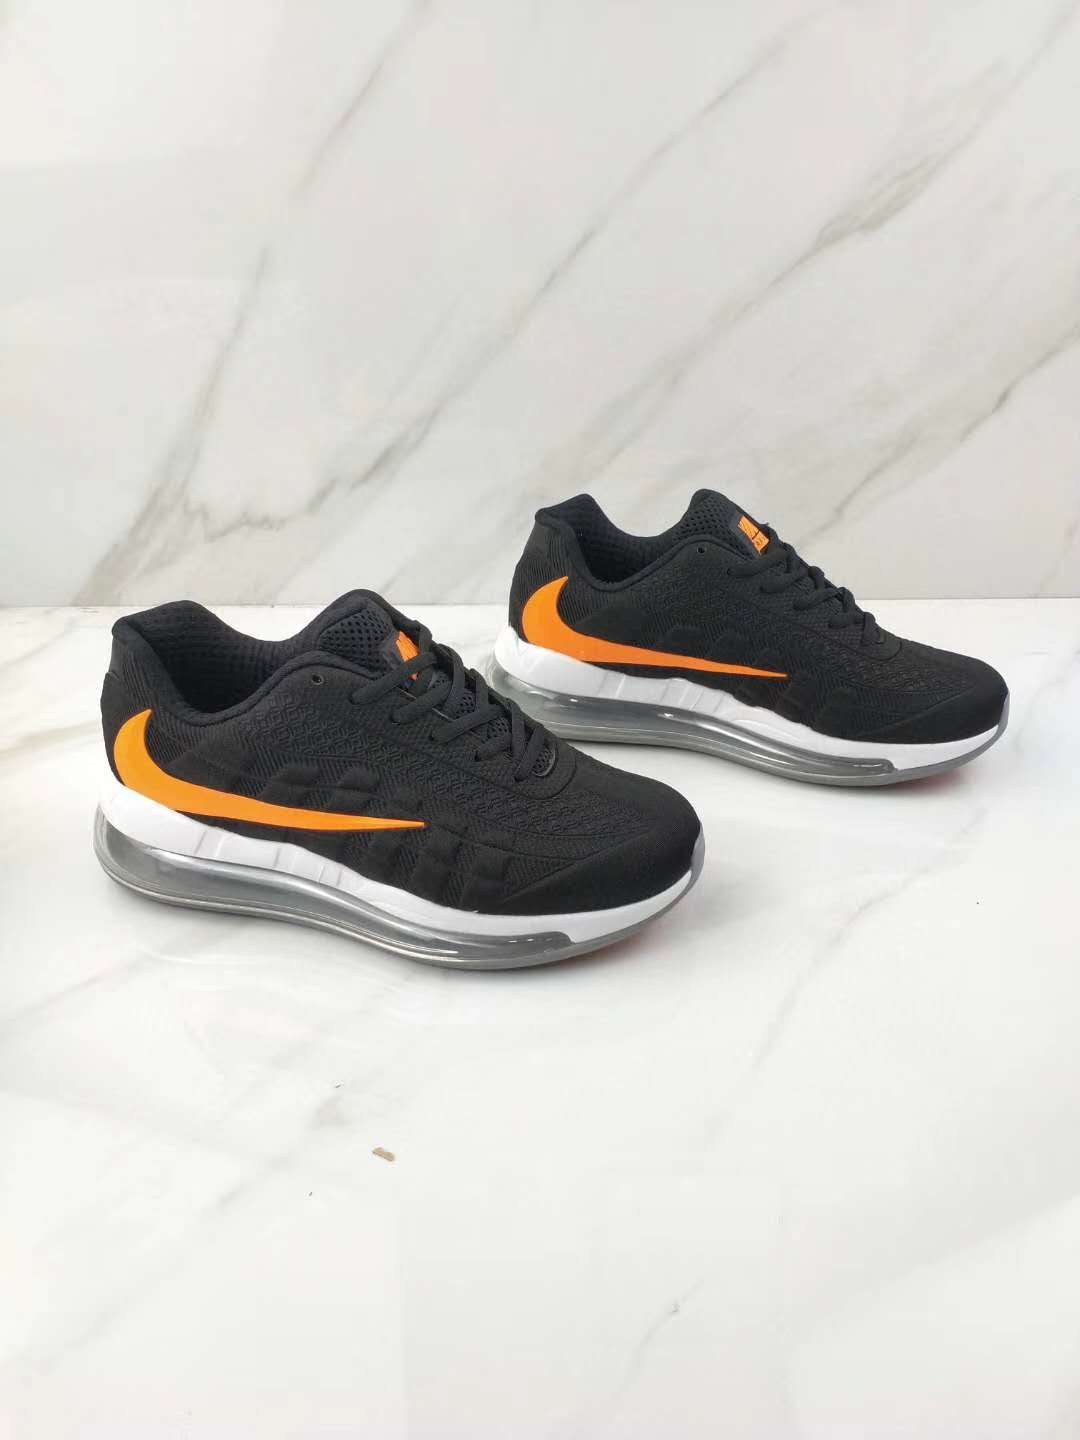 Nike Air Max 95+720 Black Yellow Shoes